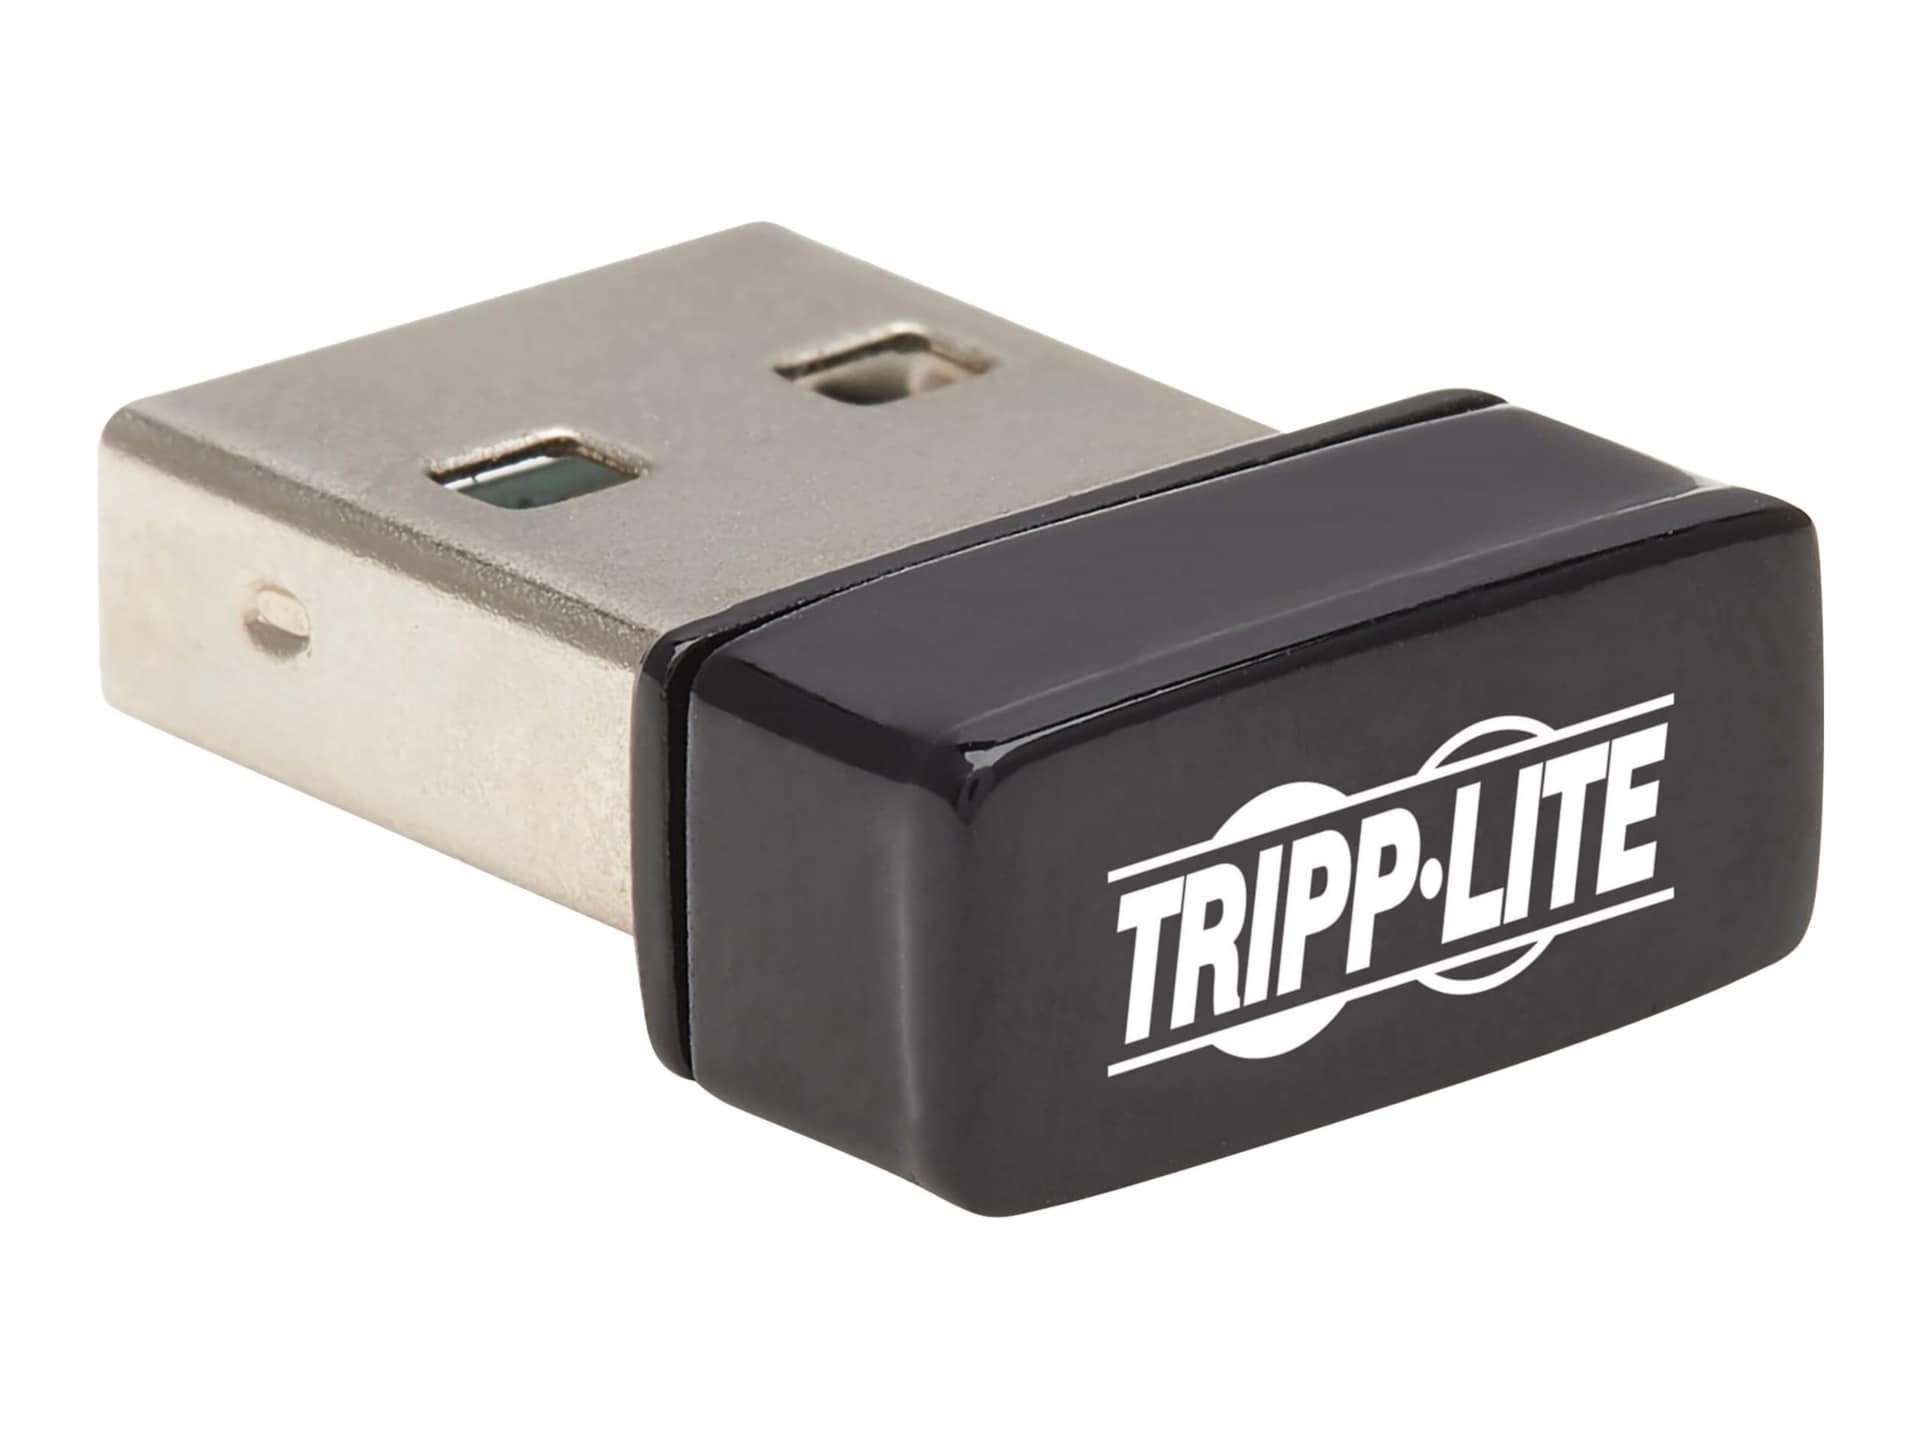 Lite USB 2.0 Wi-Fi Adapter, AC600 2.4Ghz/5Ghz Dual Band, 1T1R, 802.11ac - network adapter - USB 2.0 - U263-AC600 - Adapters - CDW.com